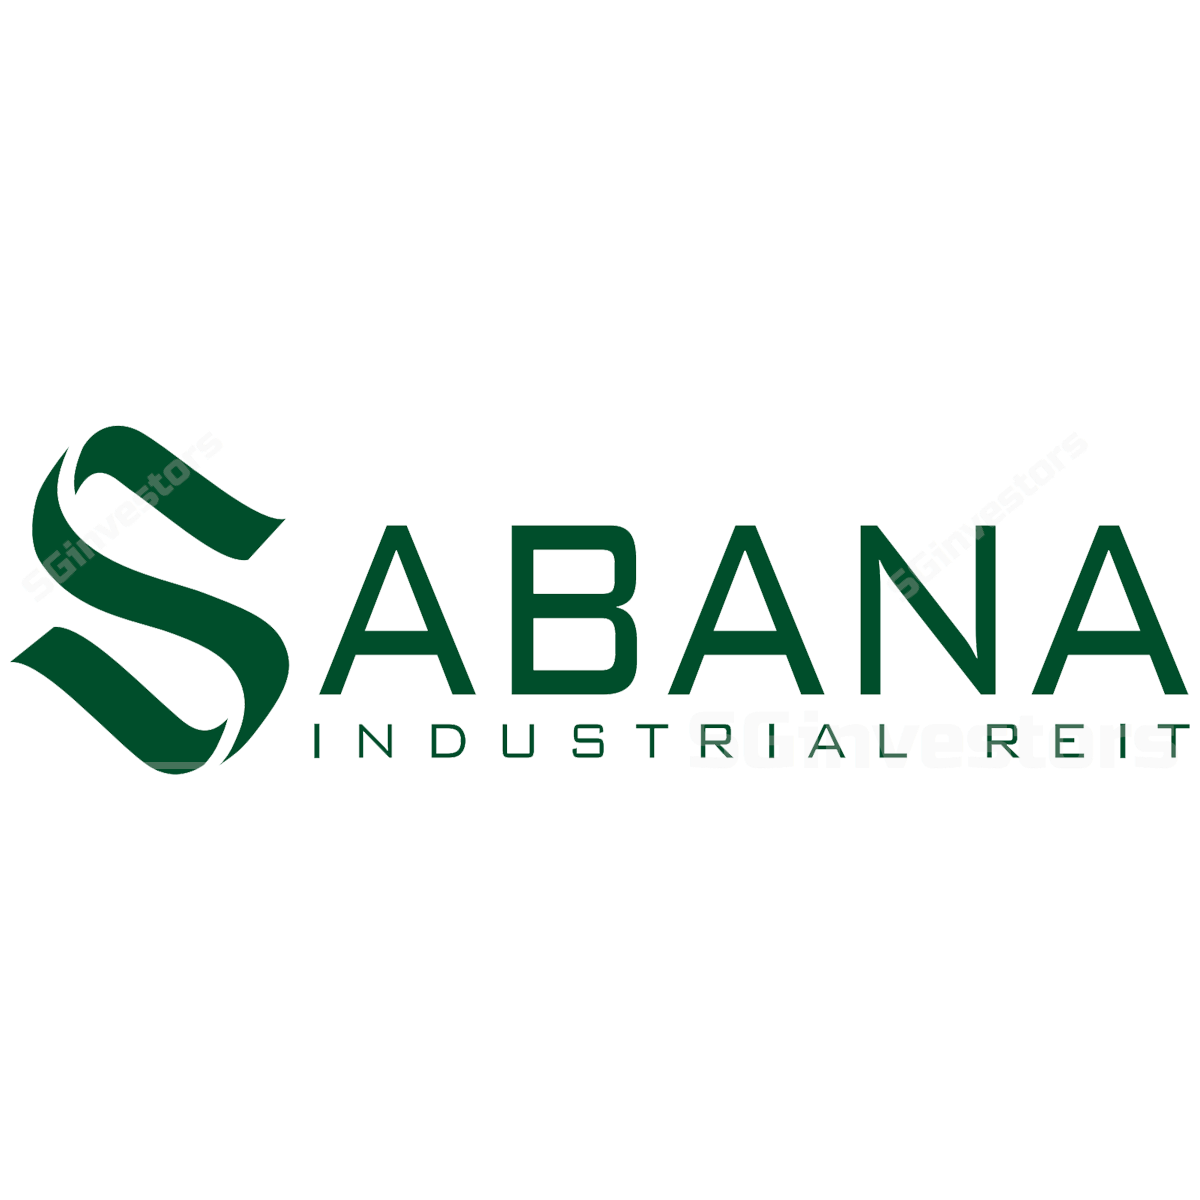 Sabana REIT (SGX:M1GU) | SGinvestors.io